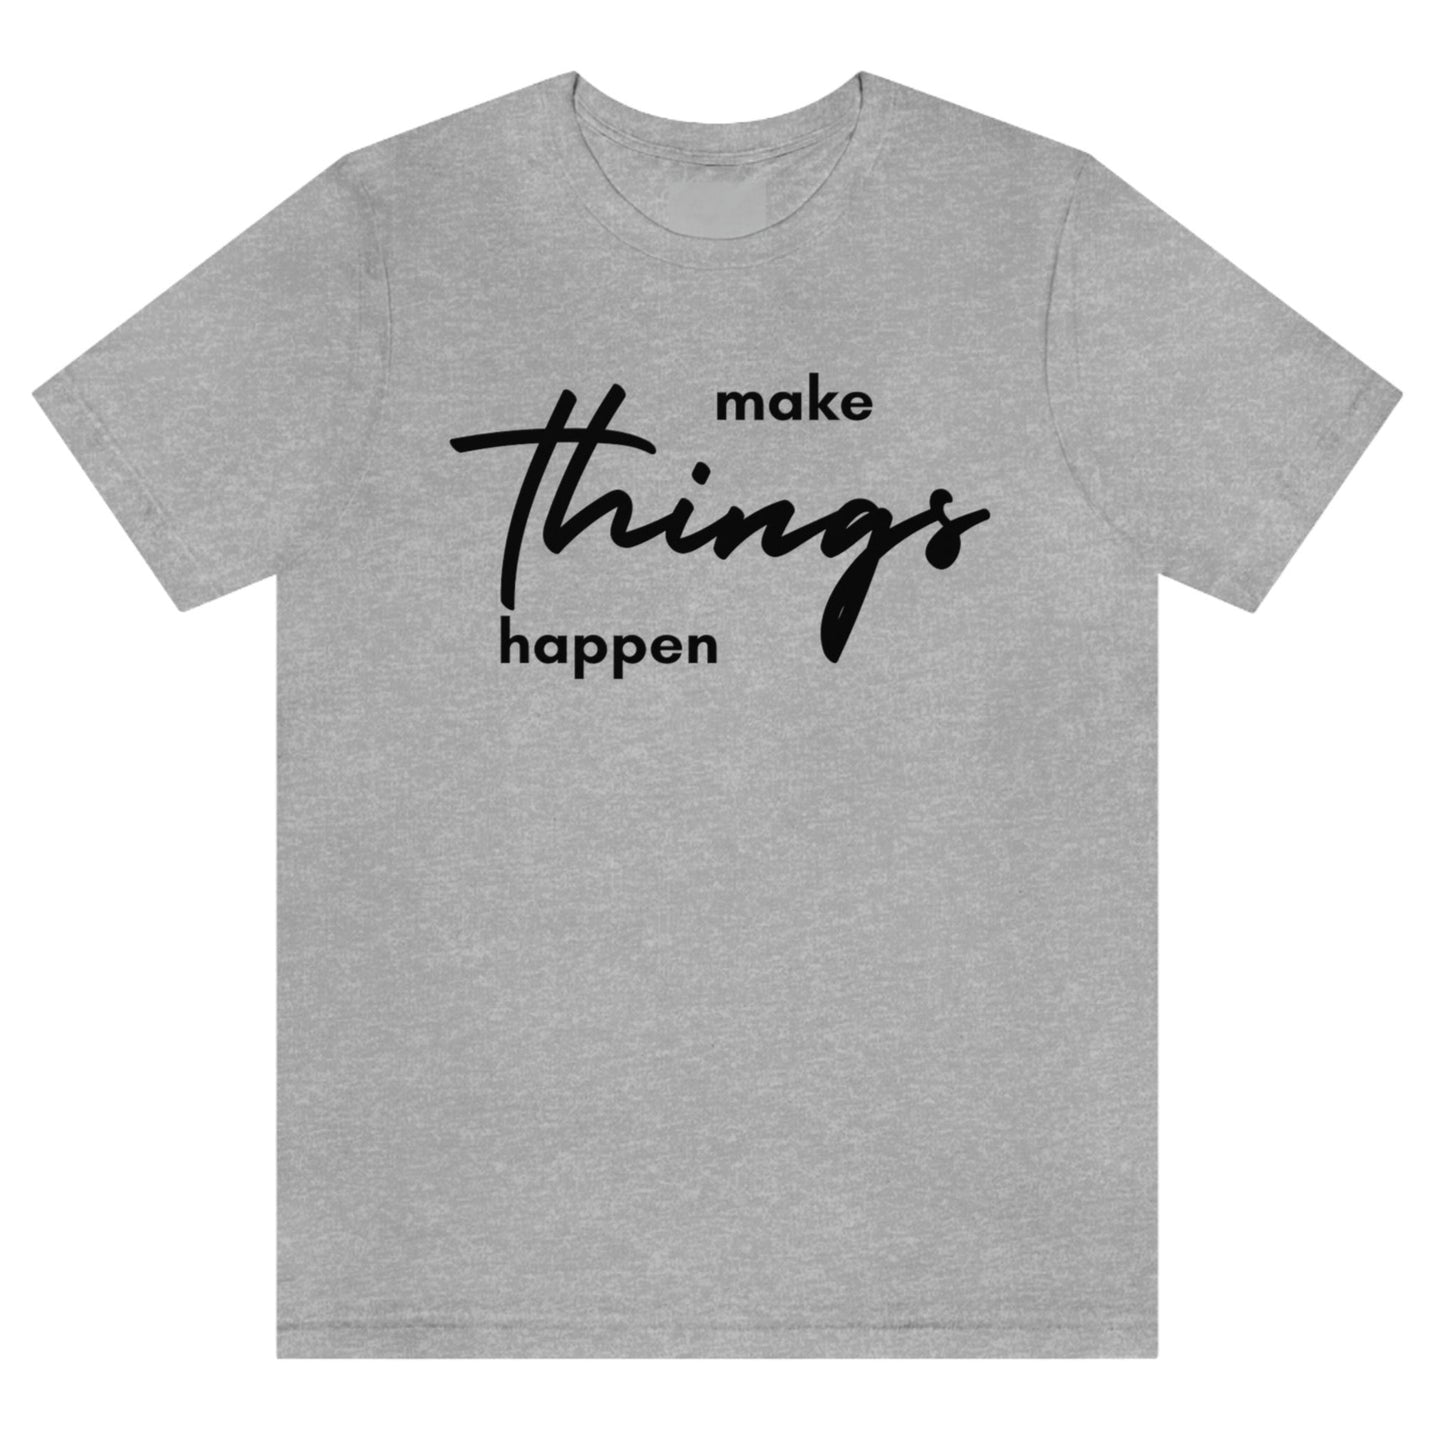 make-things-happen-athletic-heather-grey-t-shirt-women-inspiring